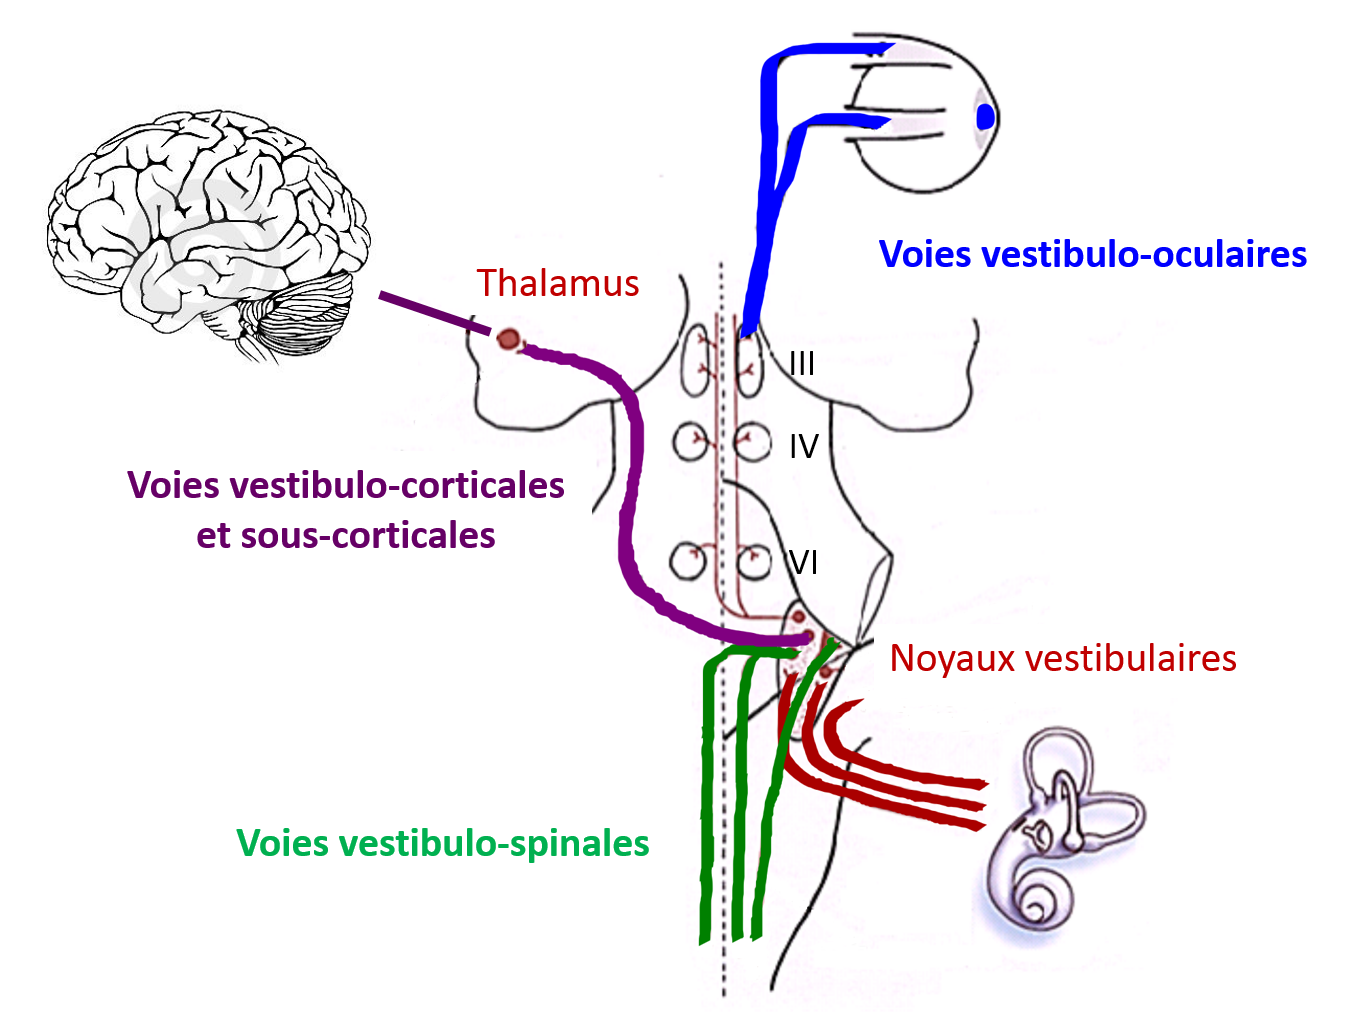 Secondary vestibular neurons - three projection pathways